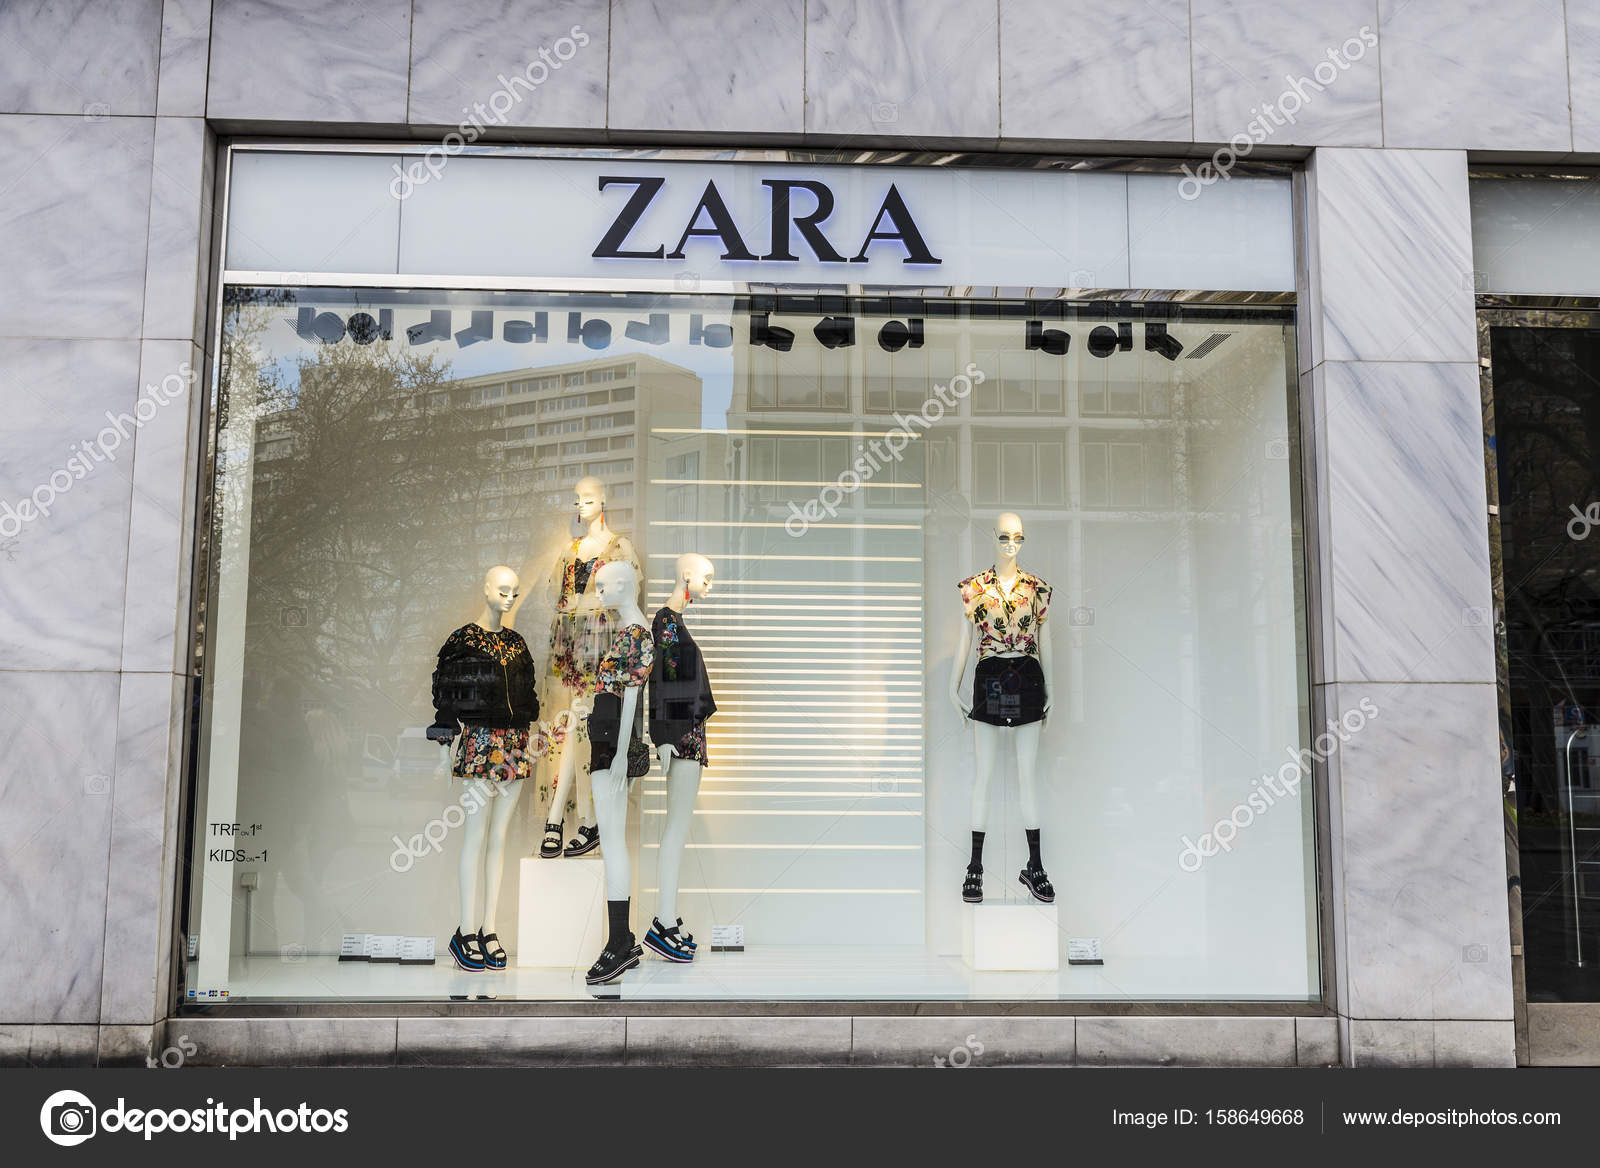 Zara shop in Berlin, Germany – Stock Editorial Photo © J2R #158649668